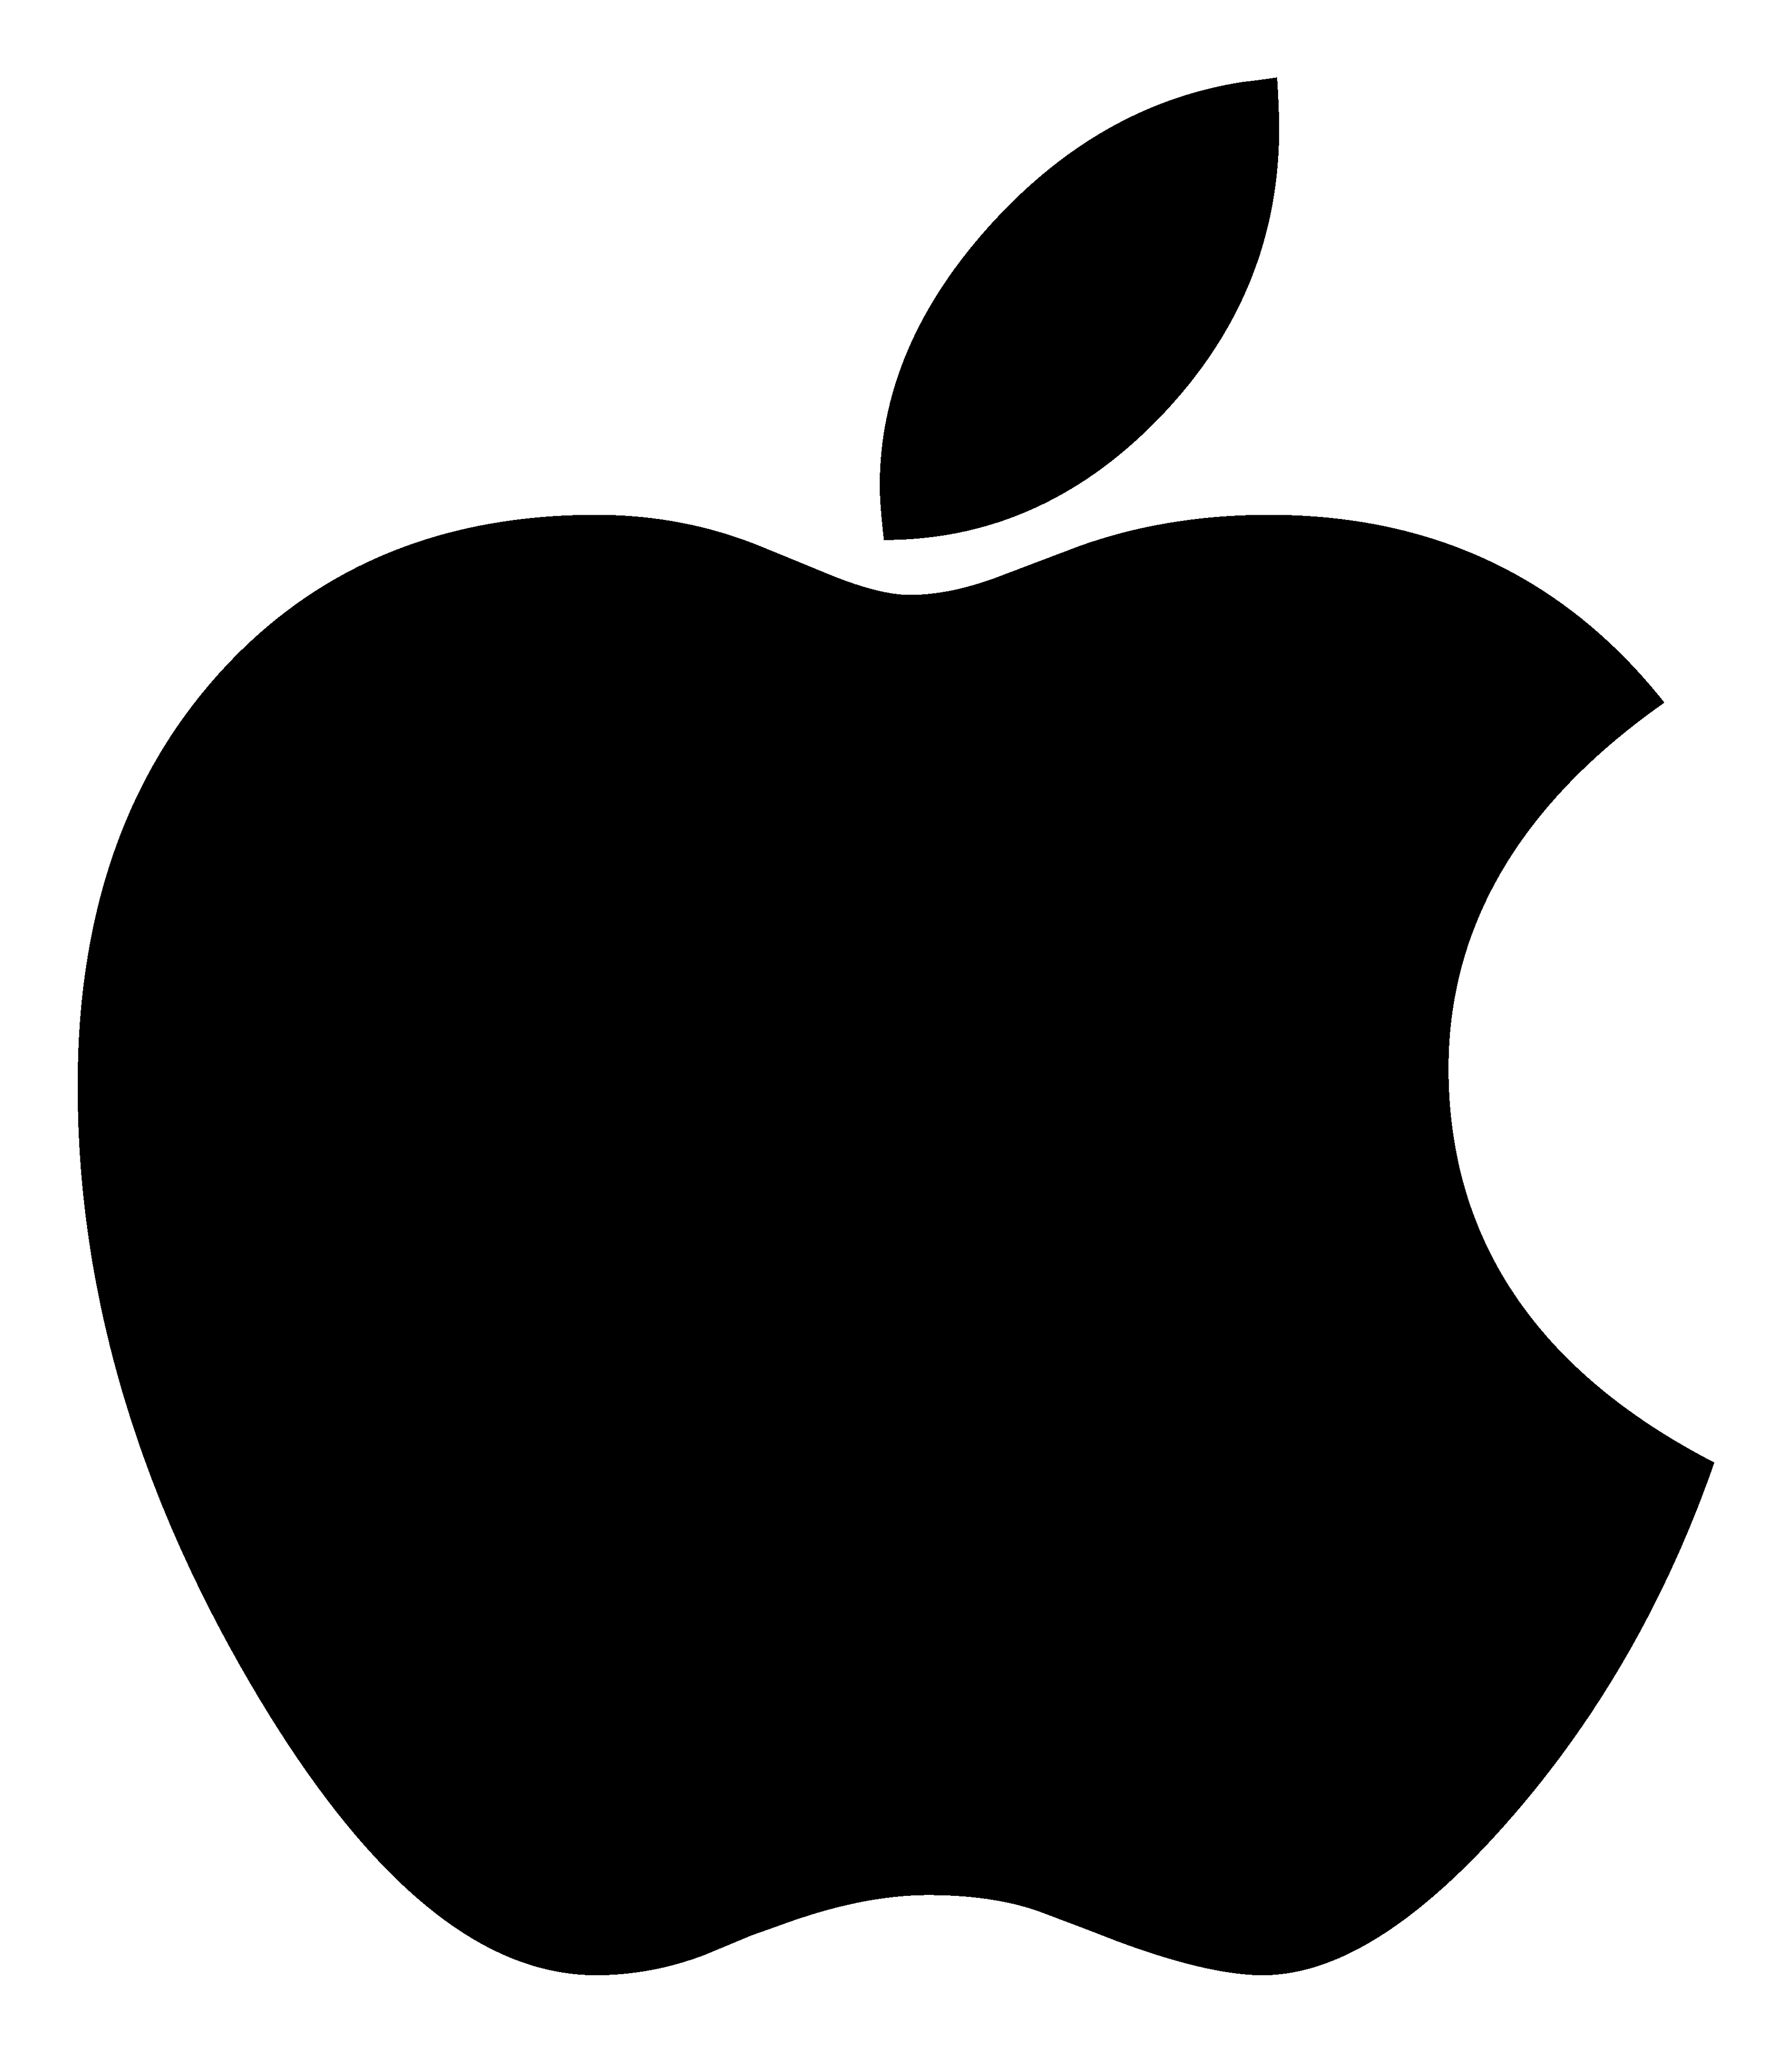 Macos Logo - Download Macos Apple Lion System Mac Operating Logo HQ PNG Image